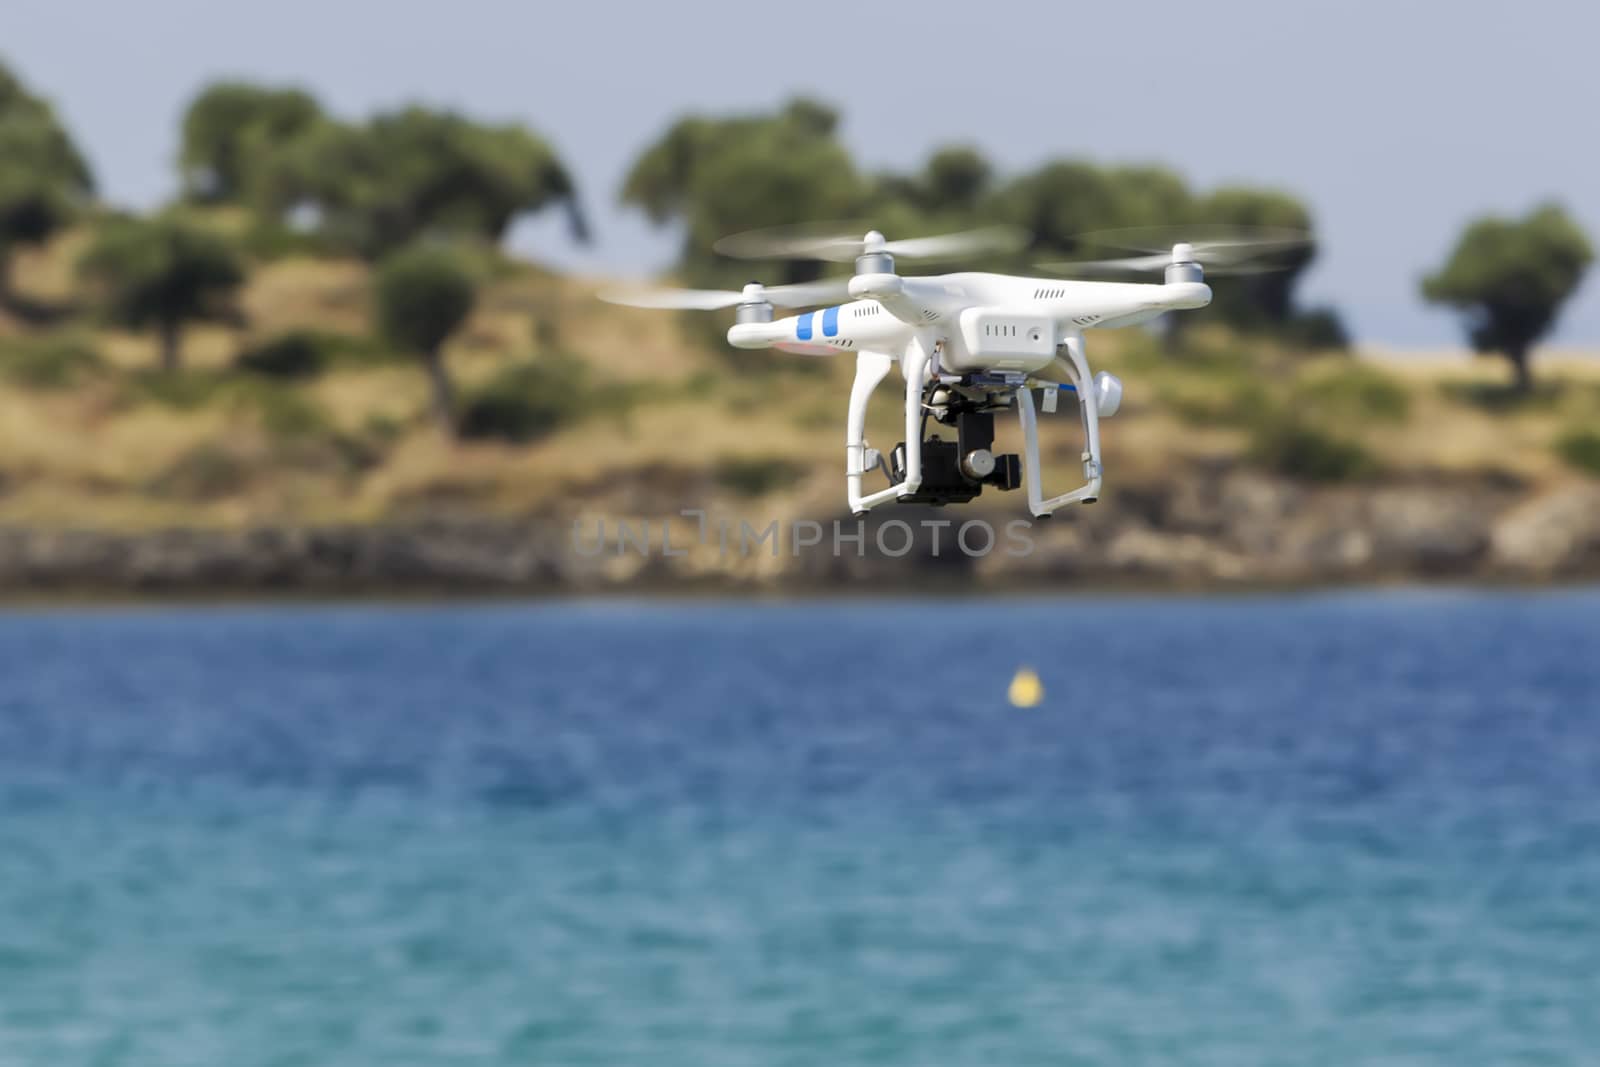  DJI Phantom drone in flight with a mounted GoPro Hero3+ Black E by ververidis